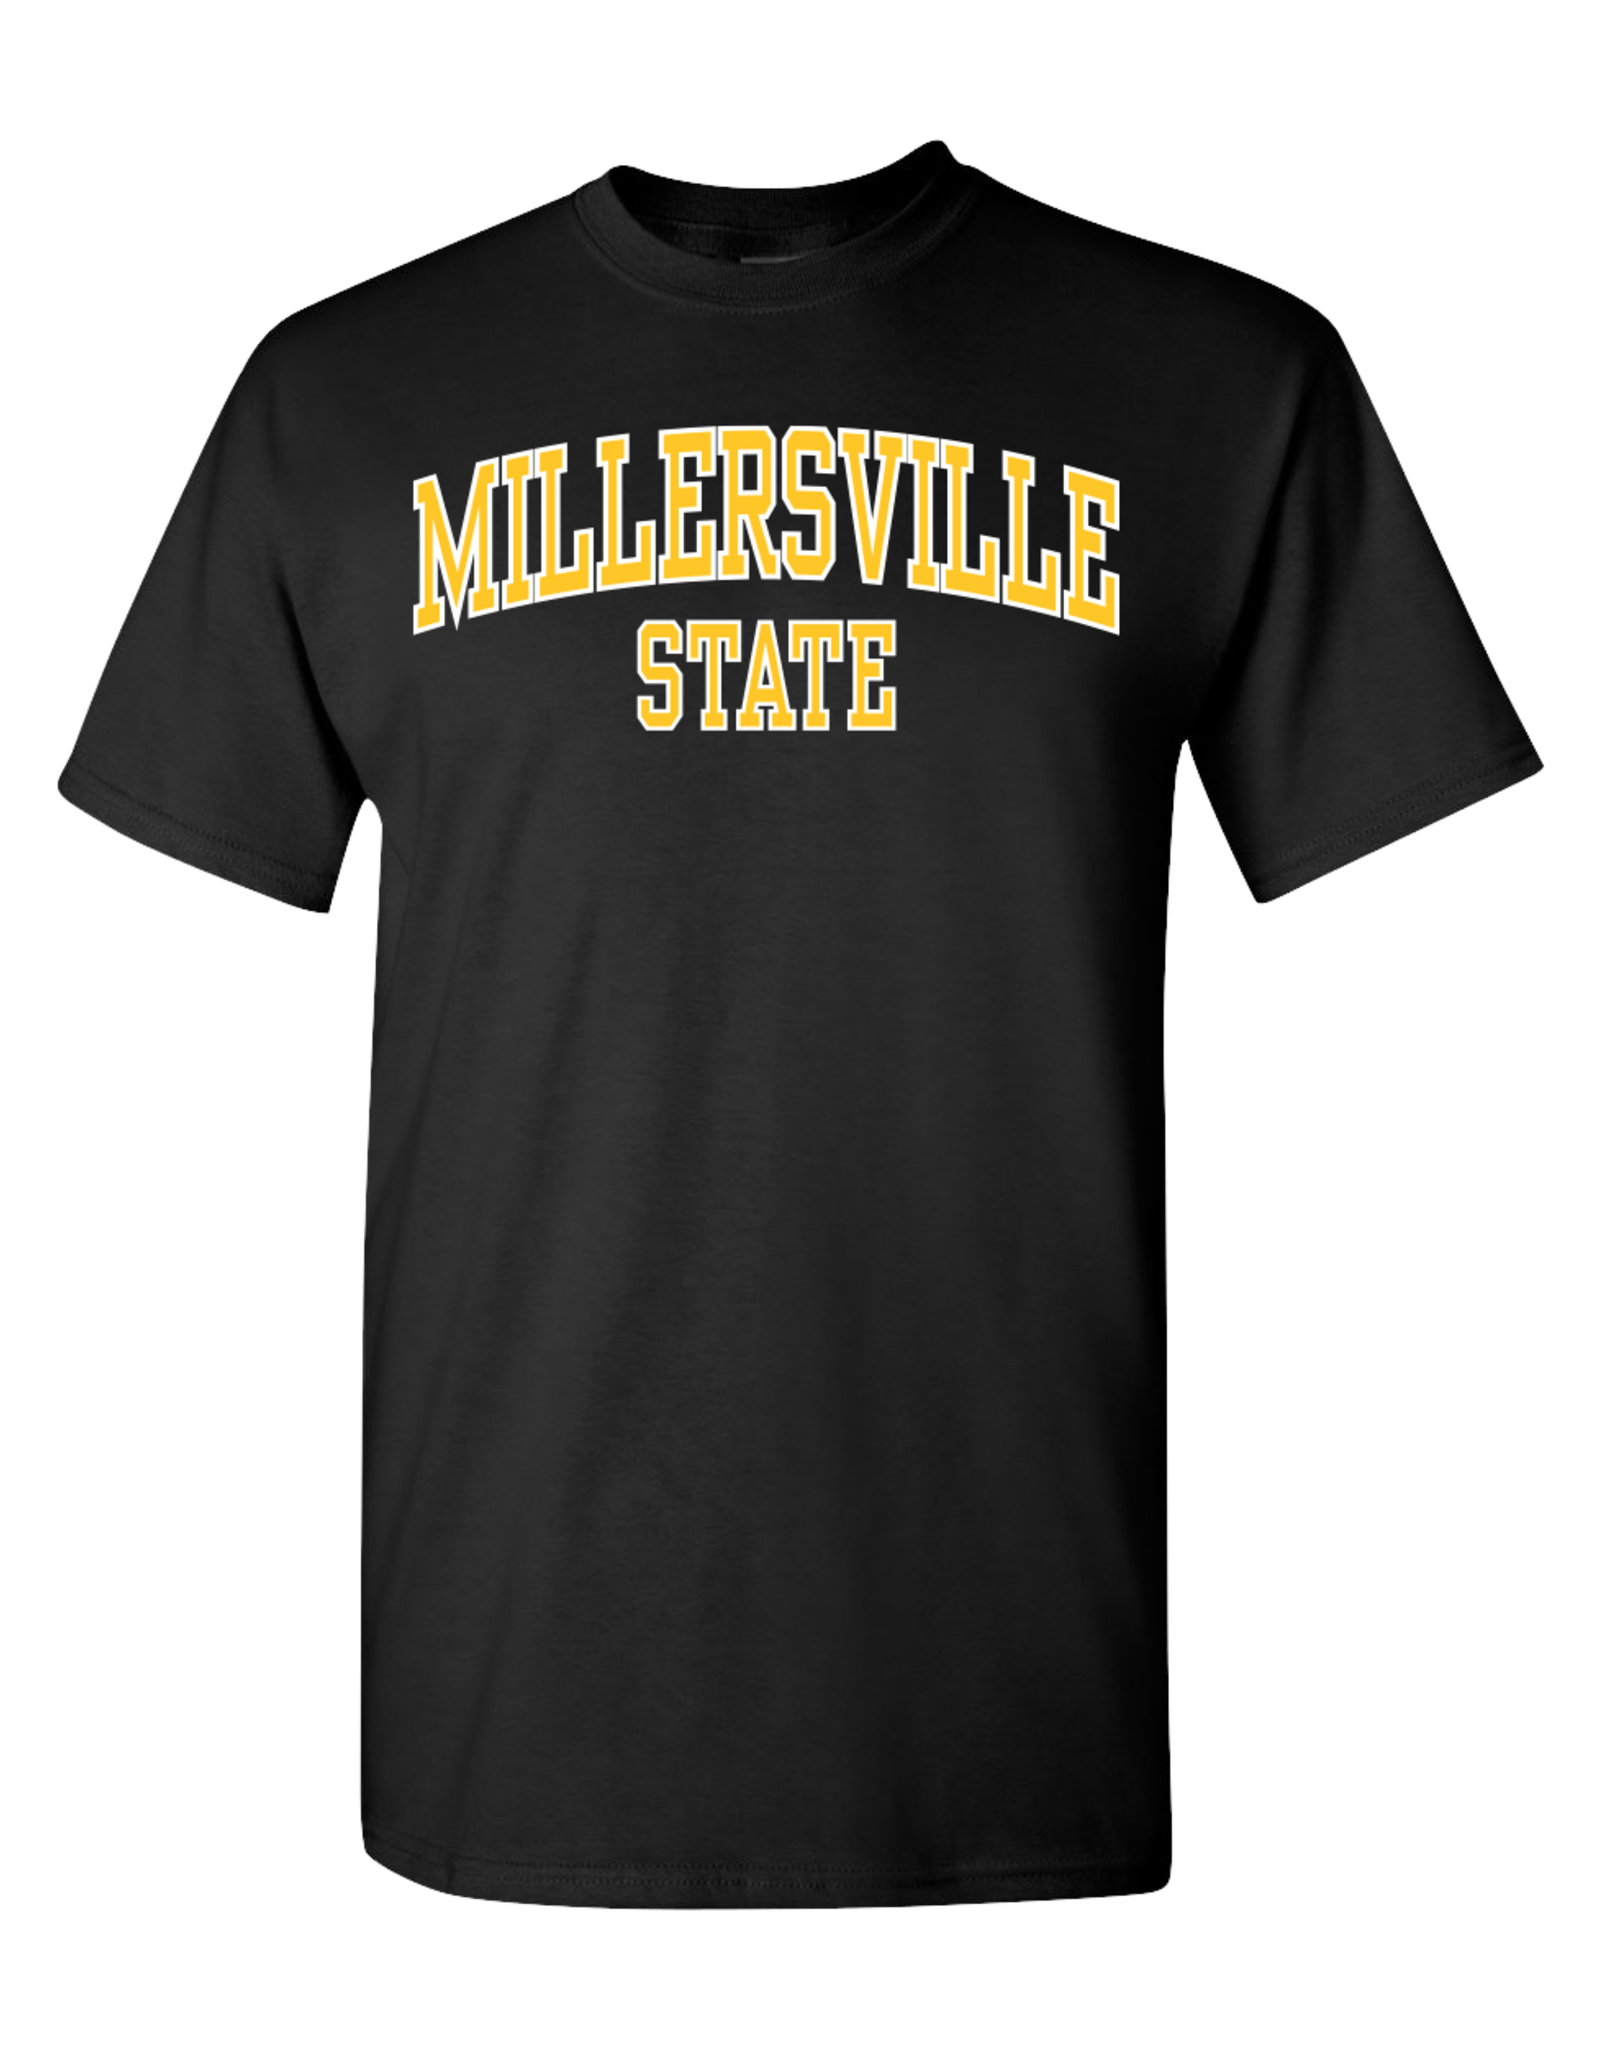 Millersville State Tee Black